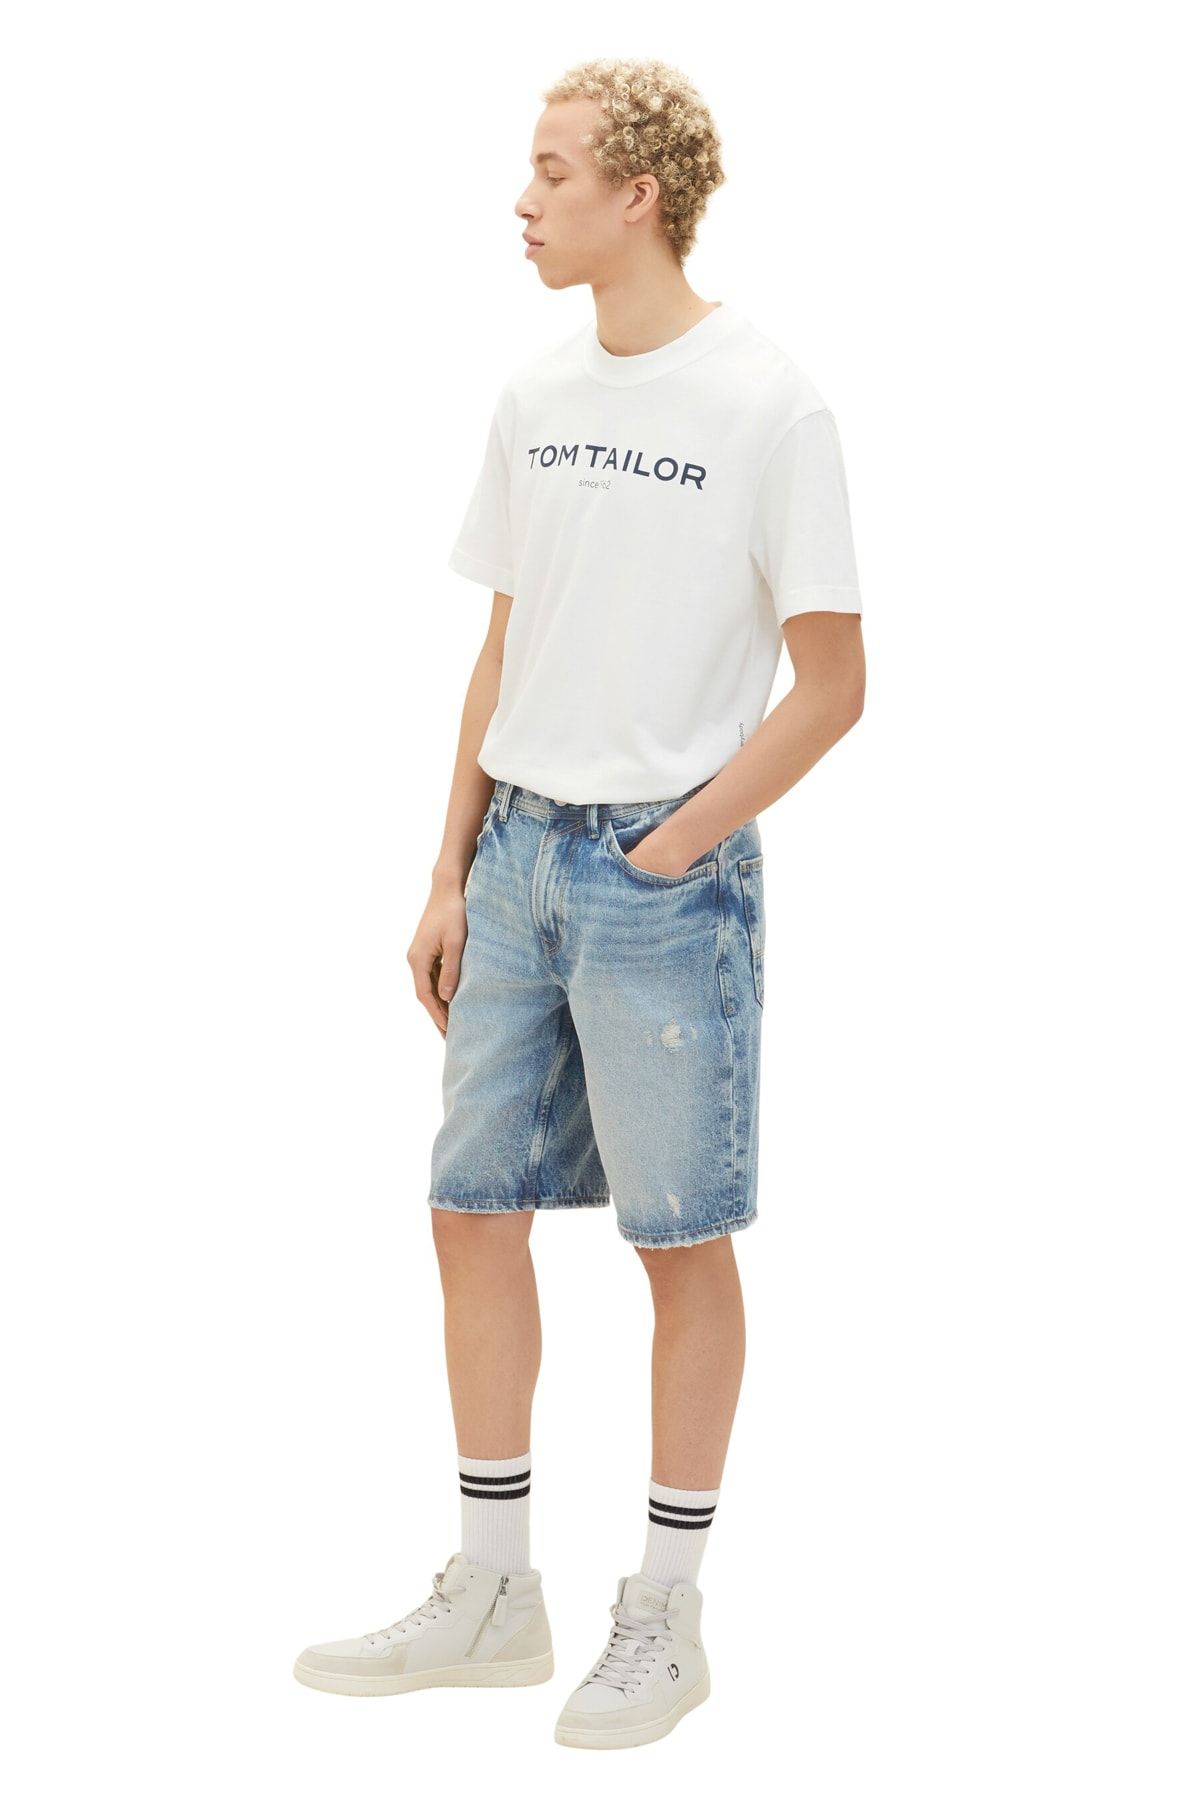 Tom Tailor Waist Gray Normal - Denim - Trendyol - Shorts